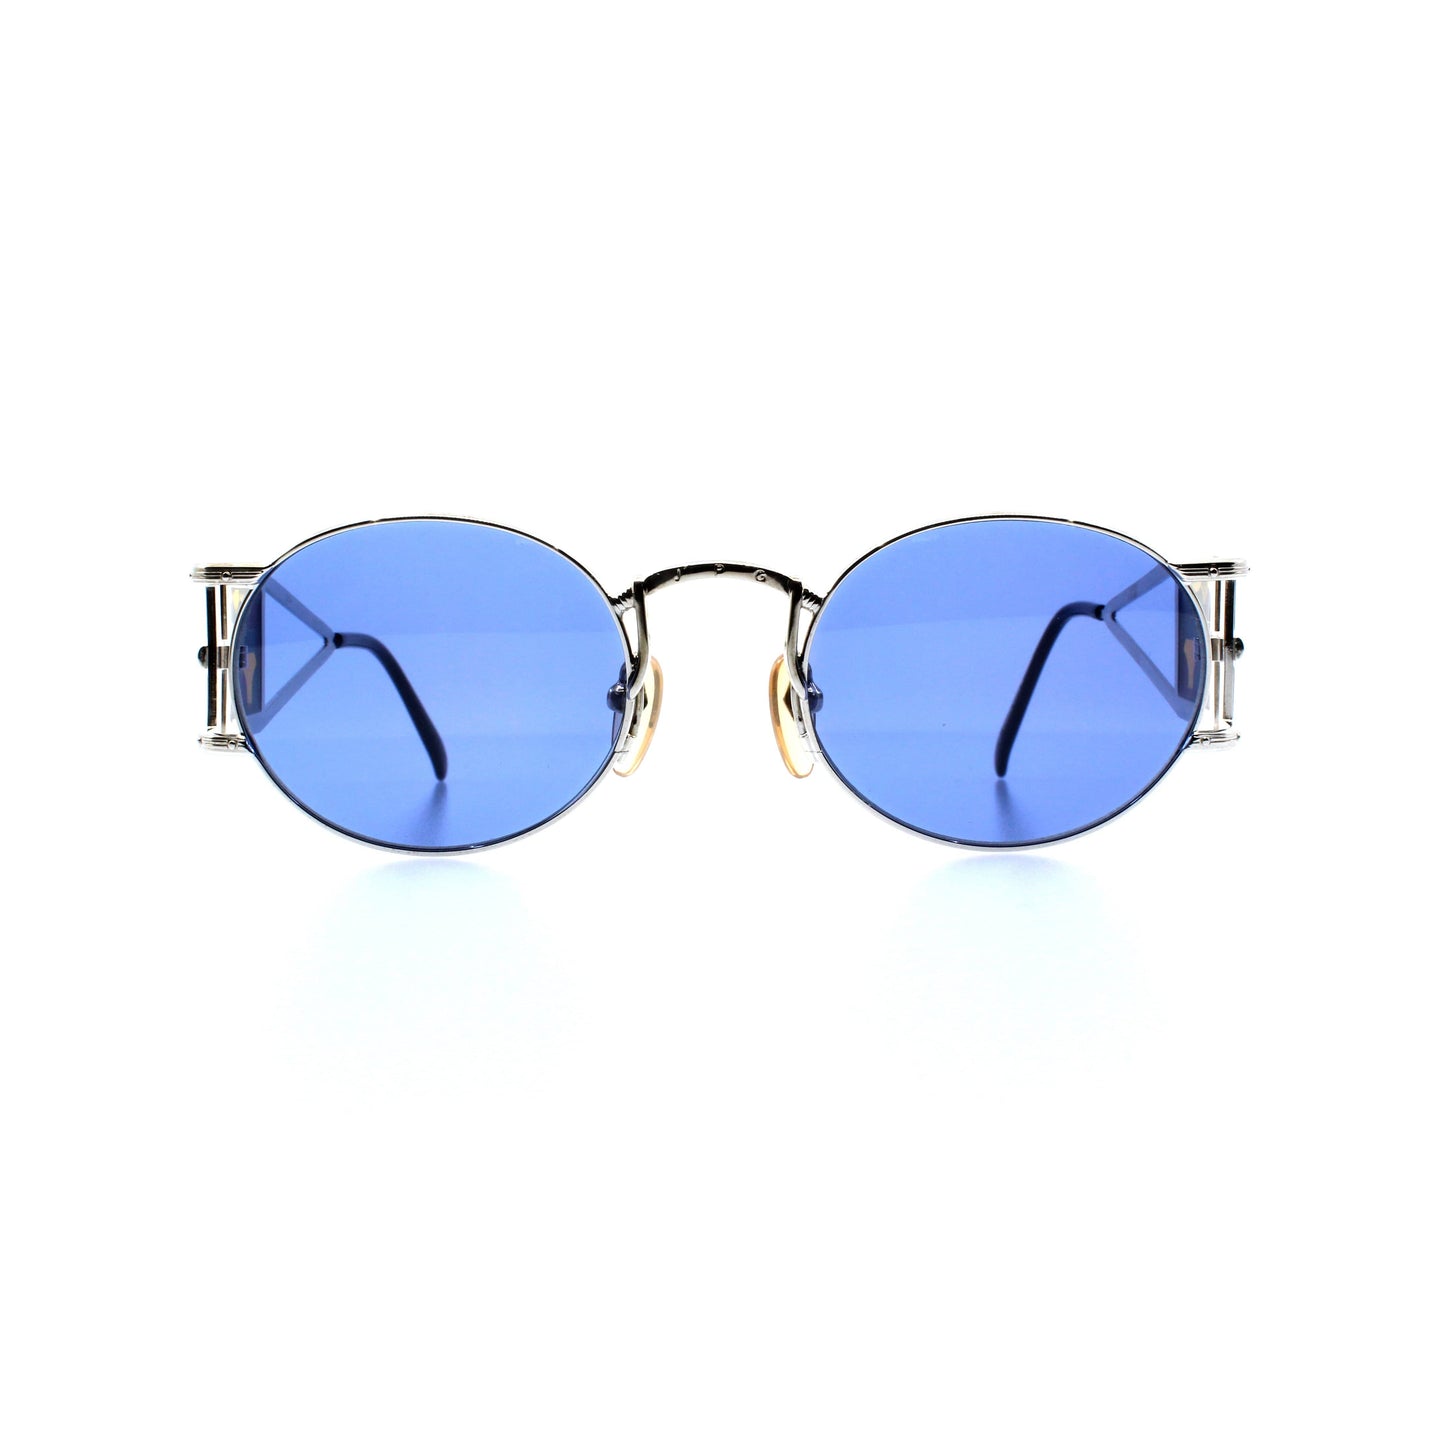 Silver Vintage Jean Paul Gaultier 56-4672 Sunglasses RSTKD Vintage